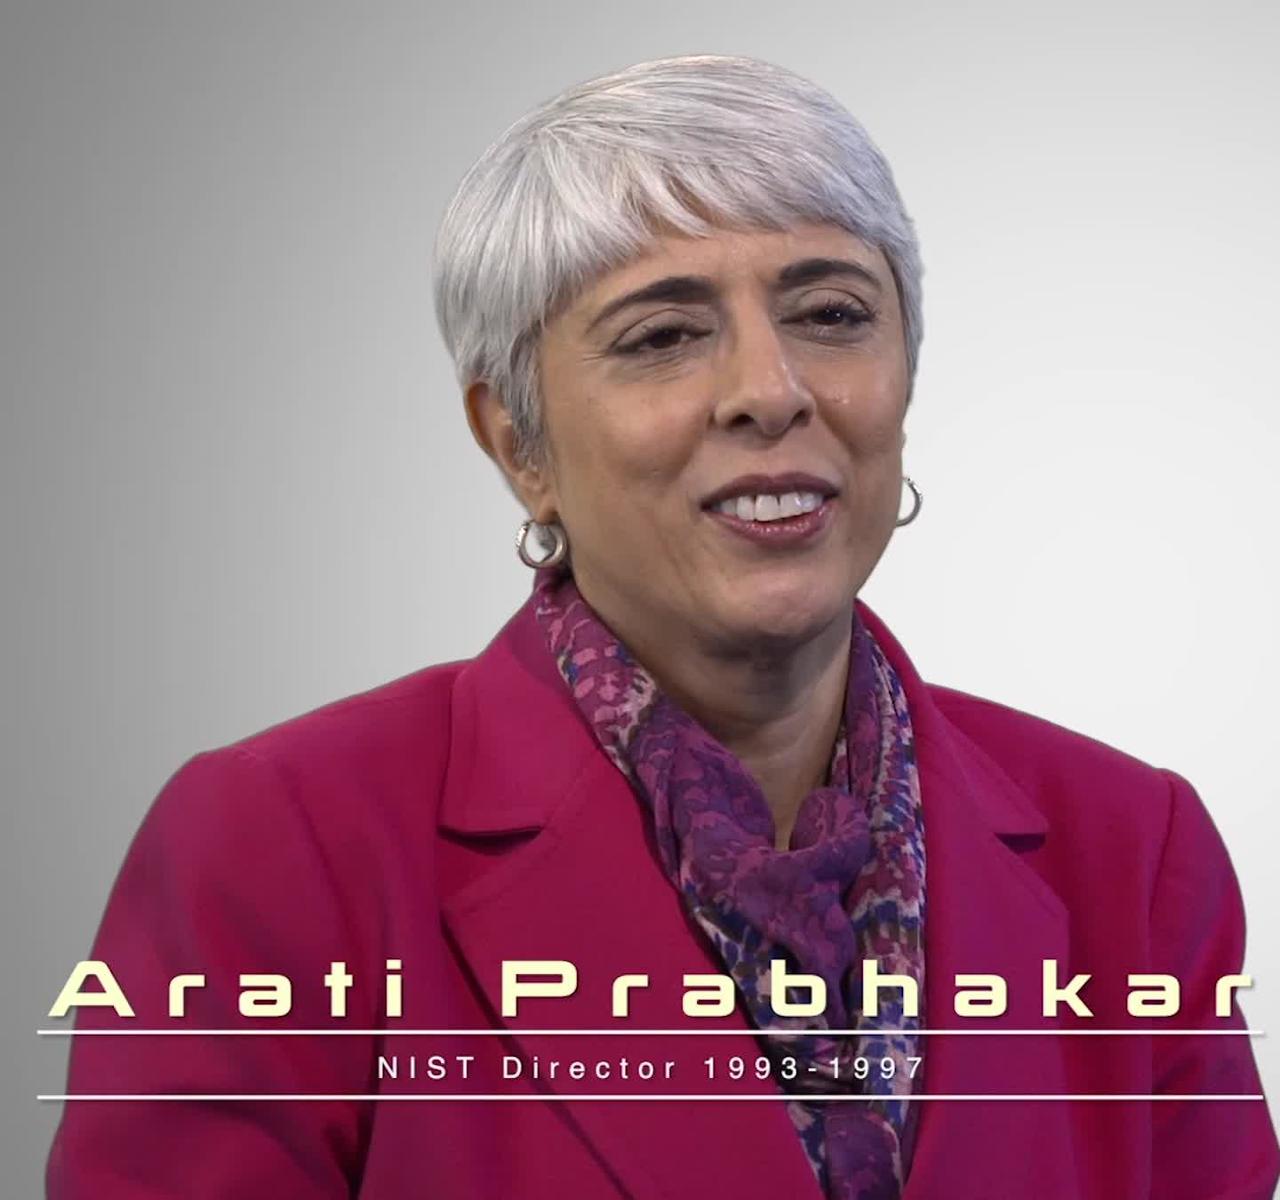 Arati Prabhakar on Why She Pursued Engineering